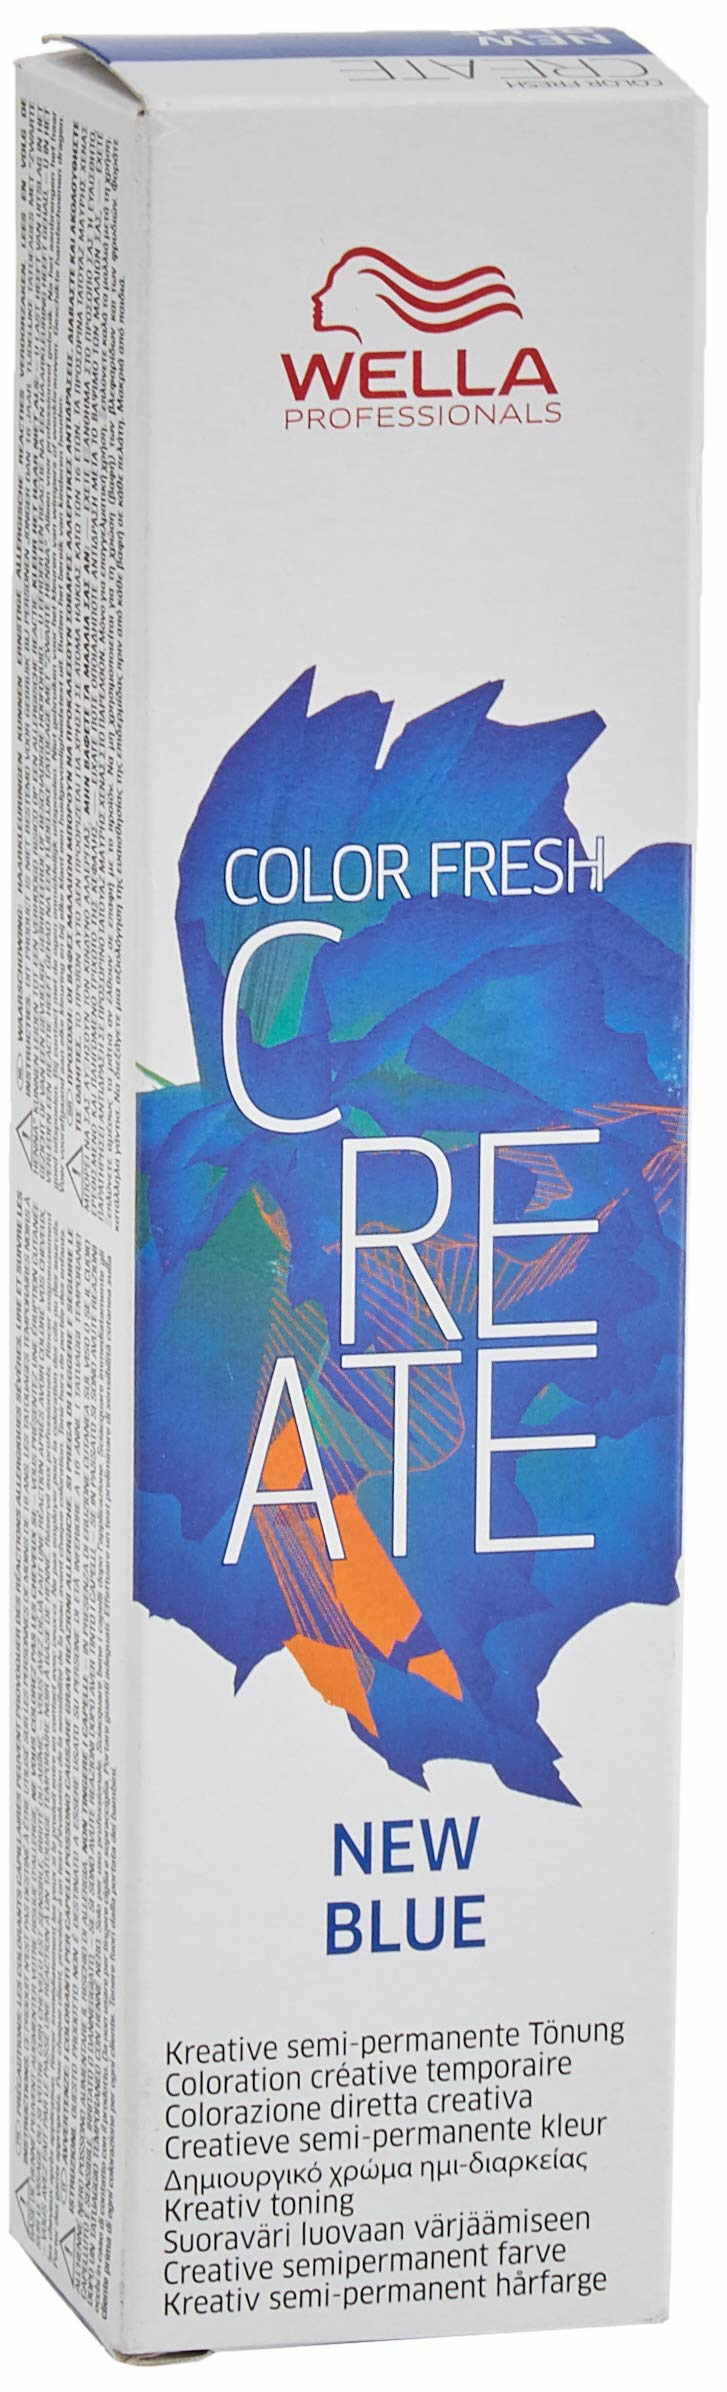 Color Fresh Create /2 New Blue 60ml